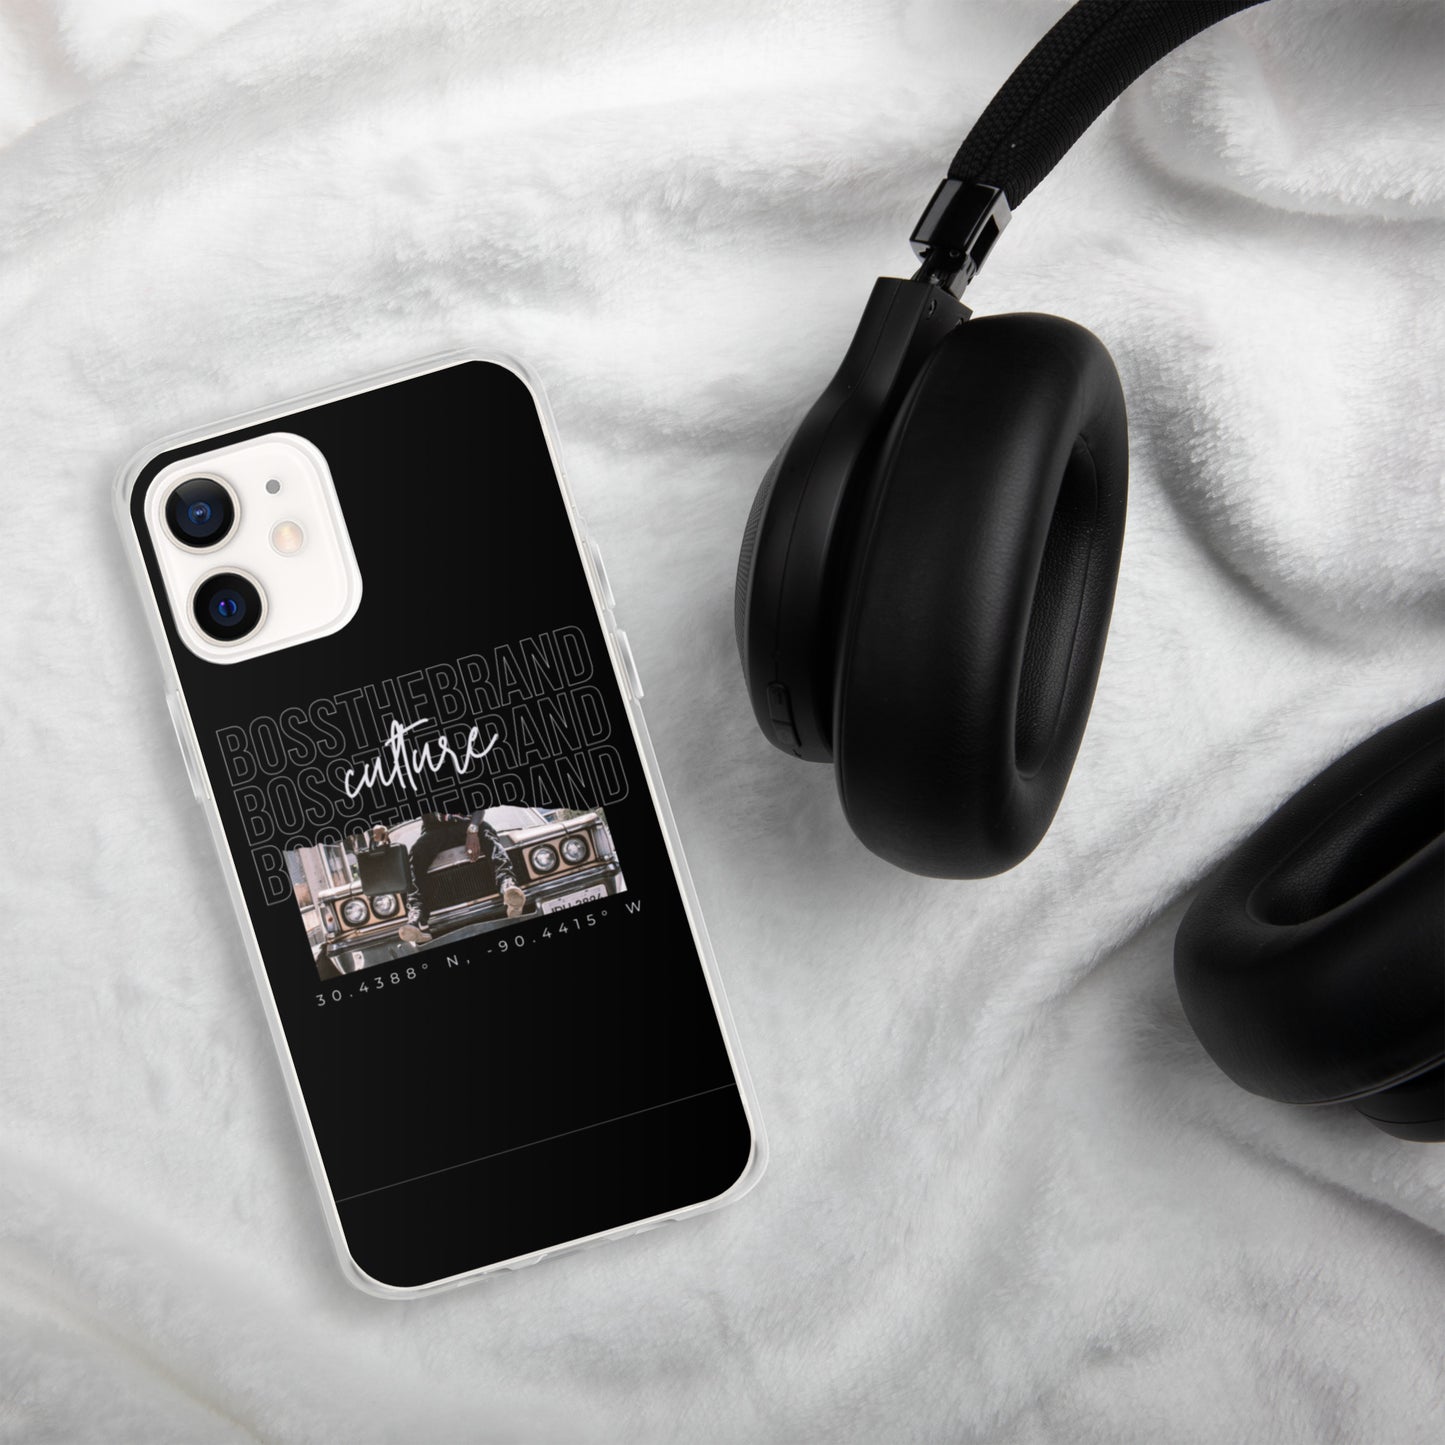 Boss The Brand Culture iPhone Case